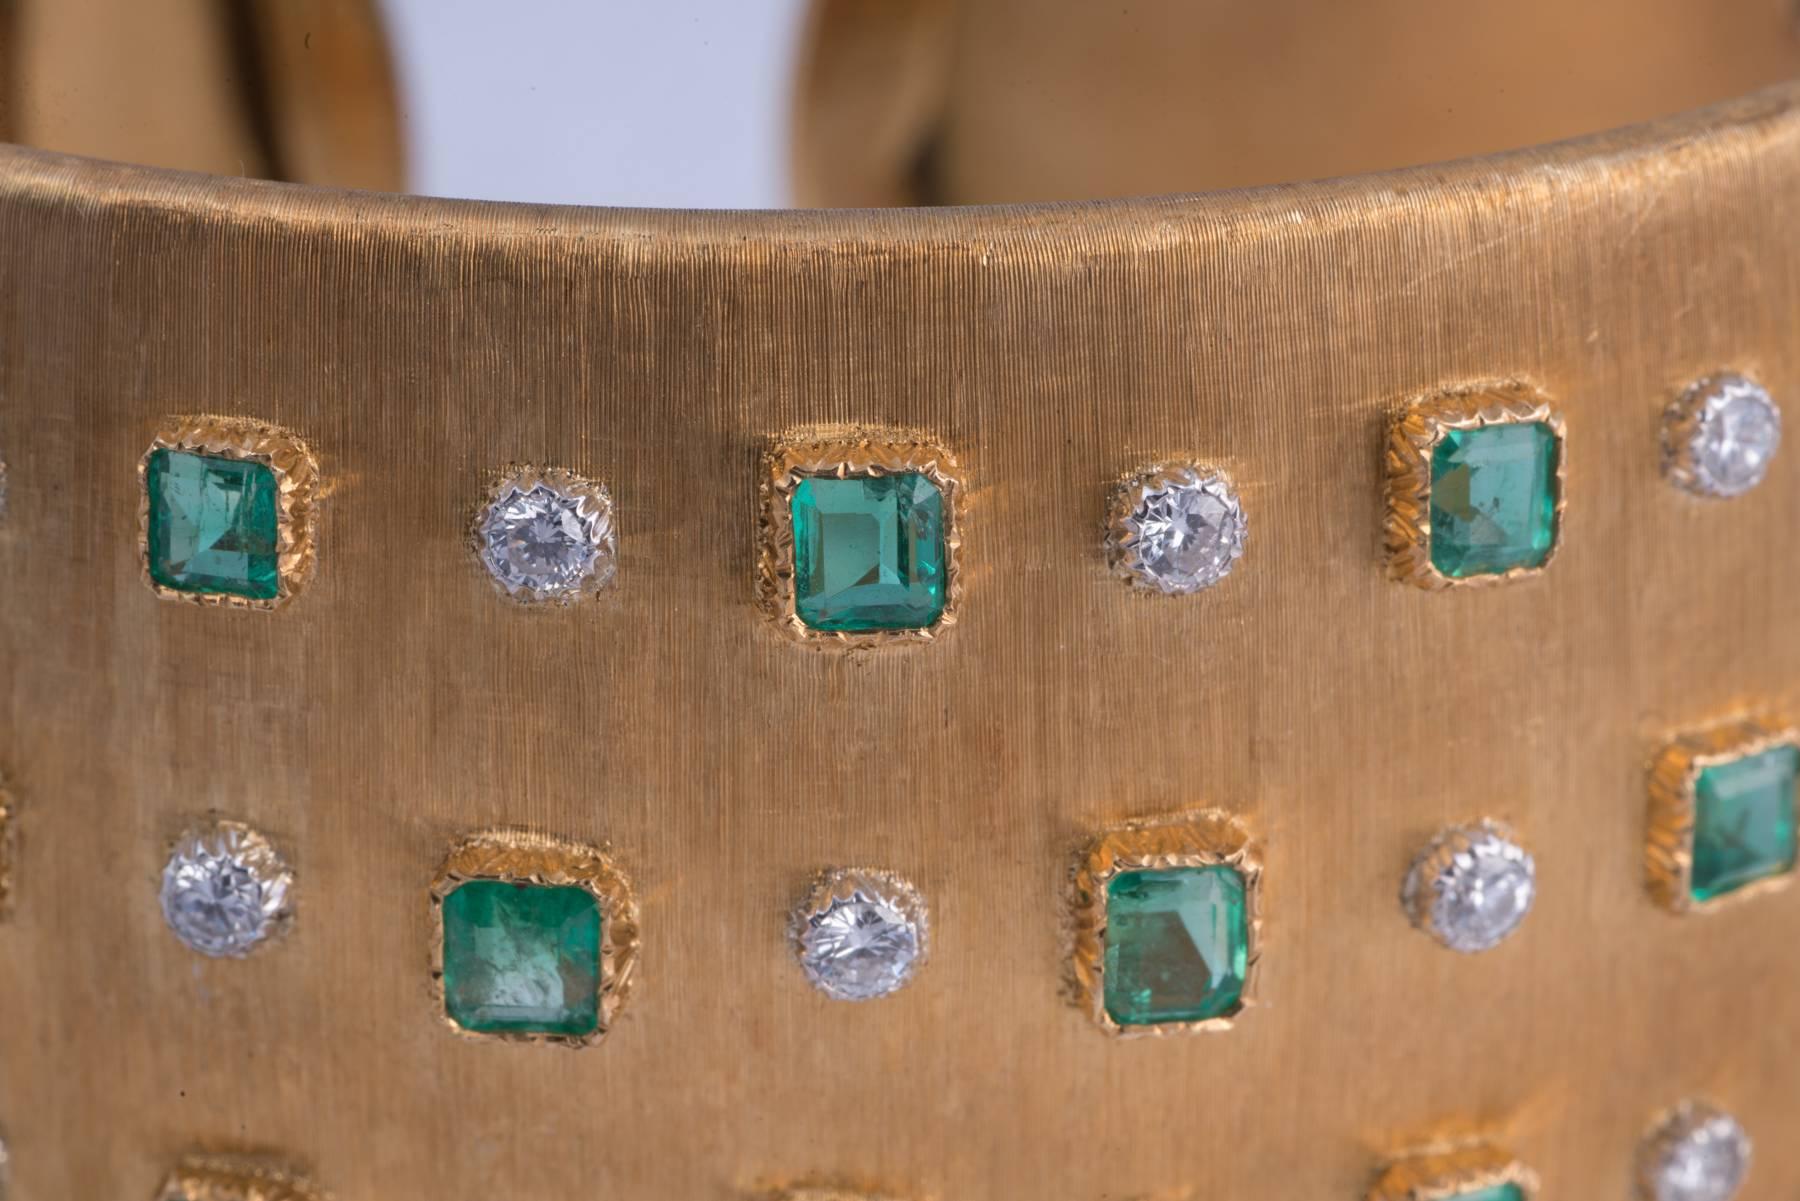 Exceptional Emerald and Diamond Cuff Bracelet
Signed Buccellati
28 full Cut Diamonds
25 Columbian Emeralds